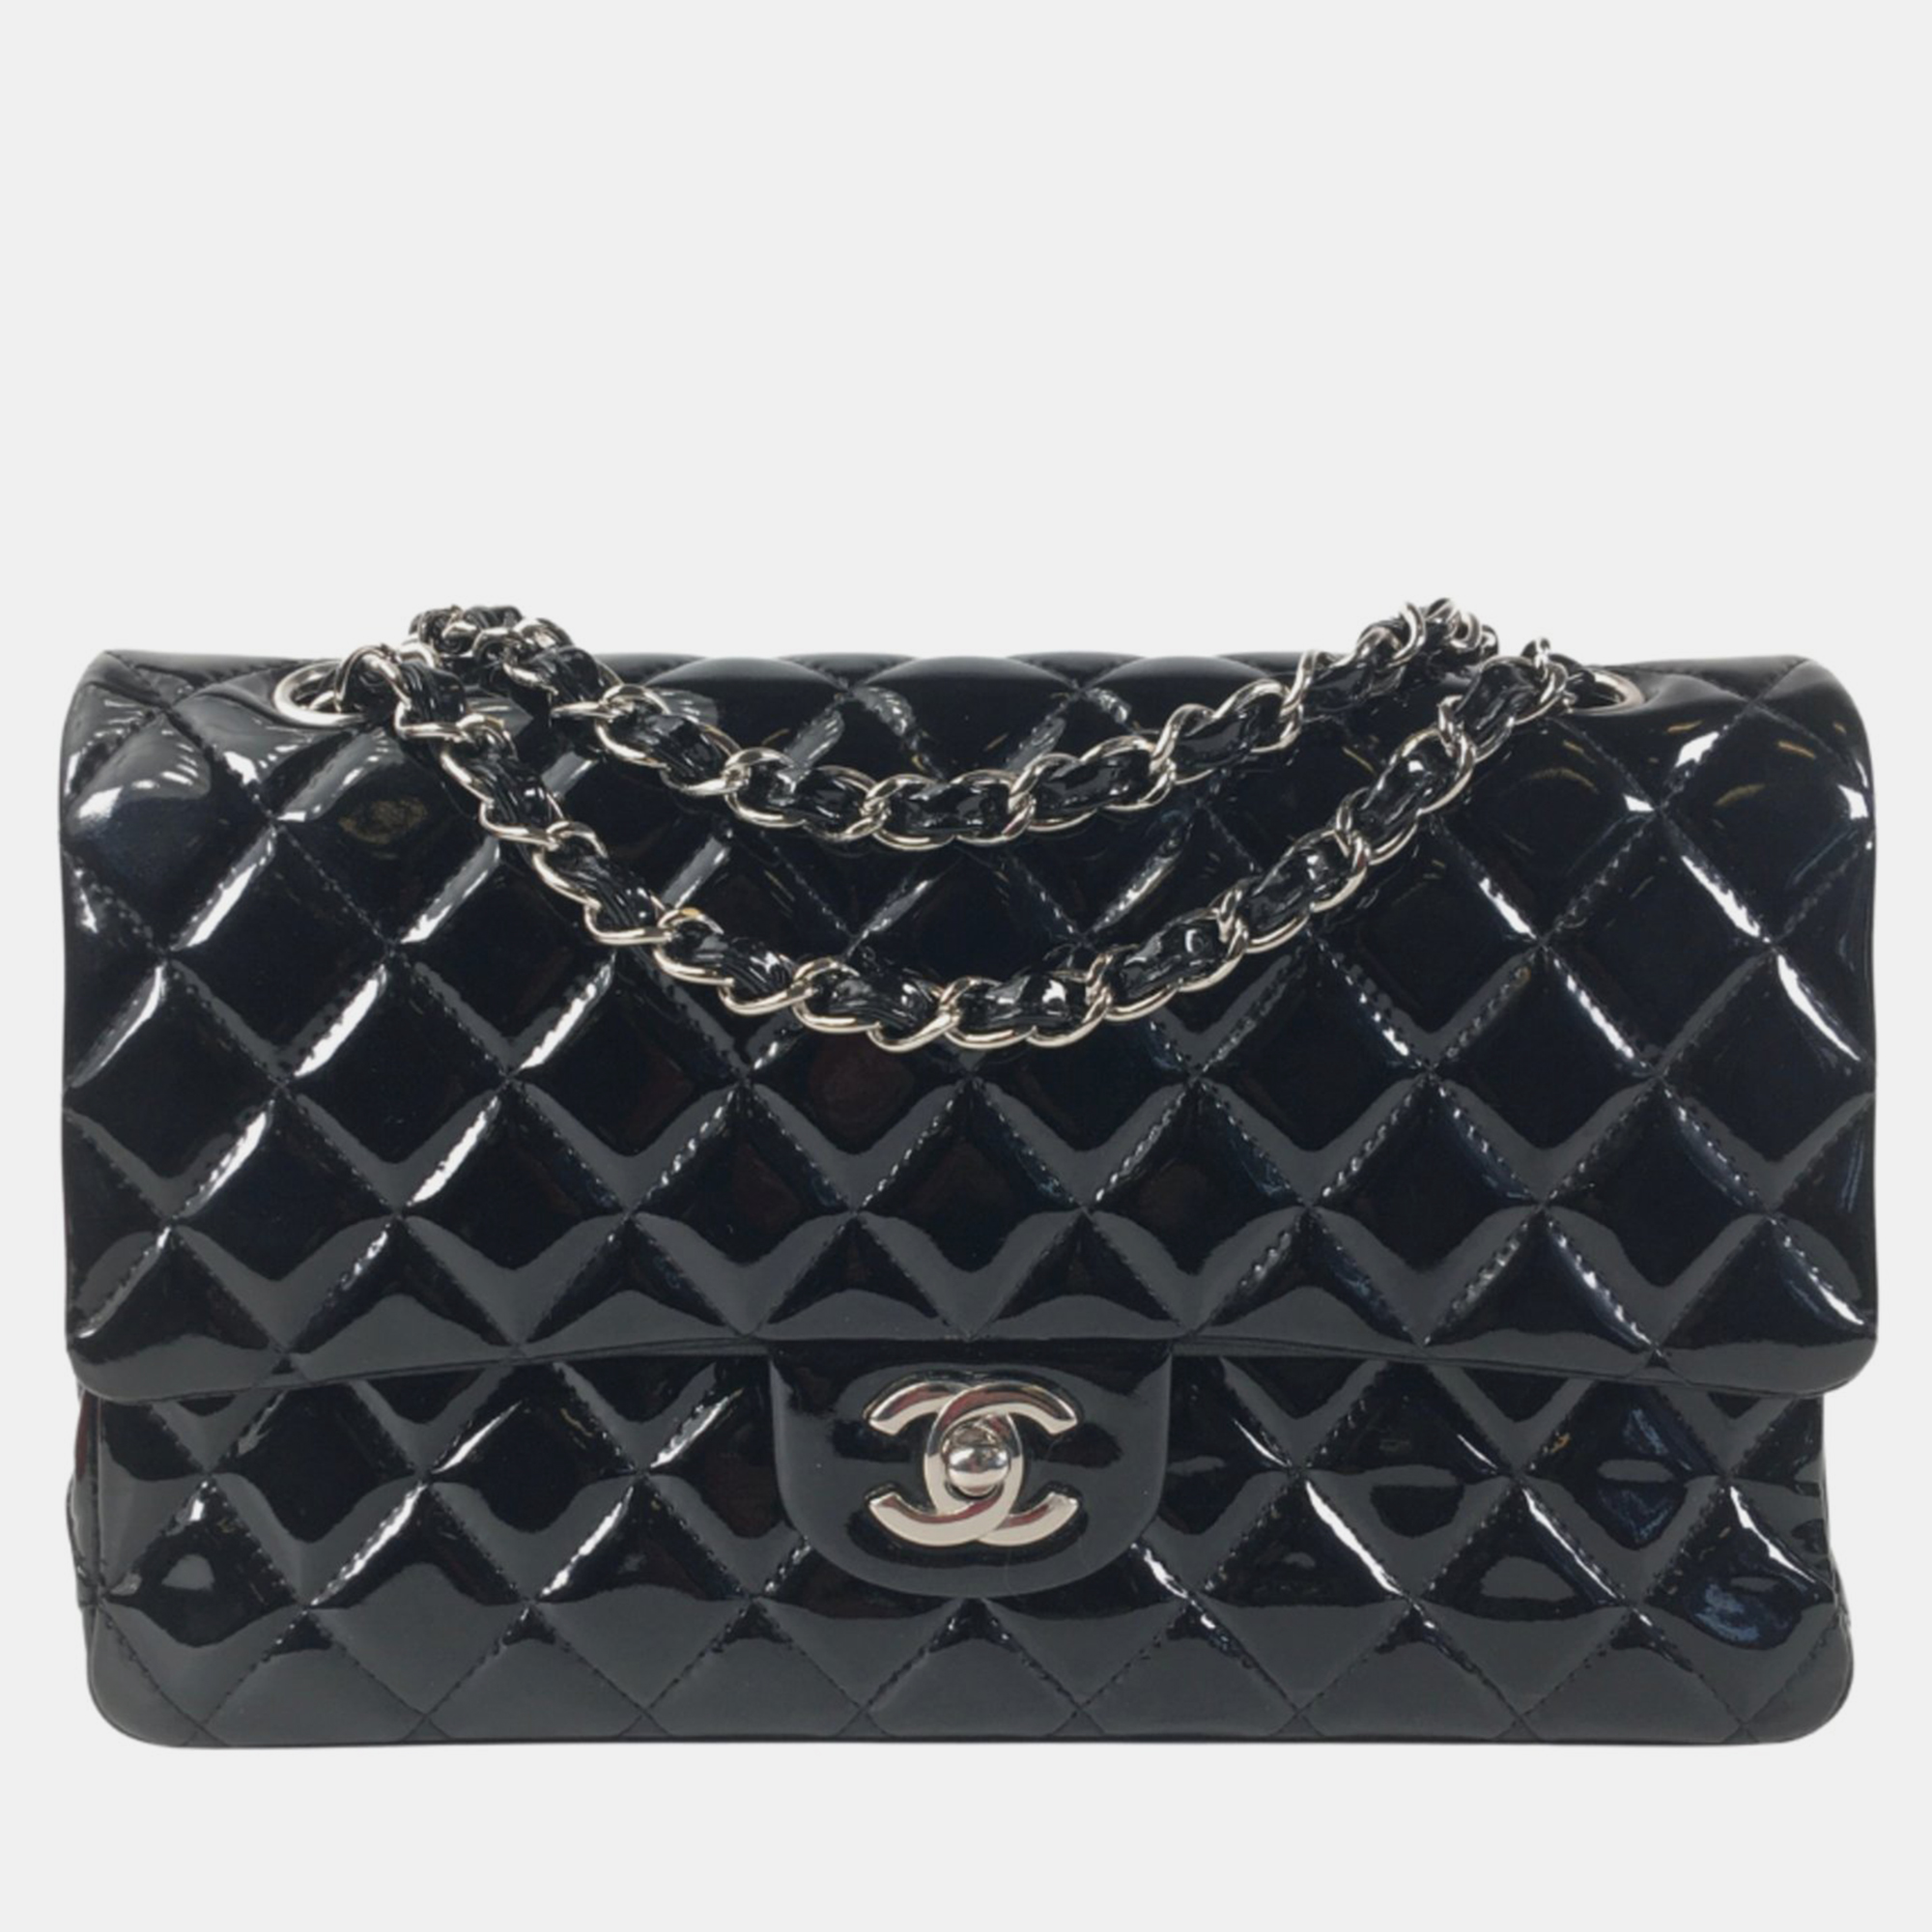 Chanel black patent leather medium classic double flap shoulder bags